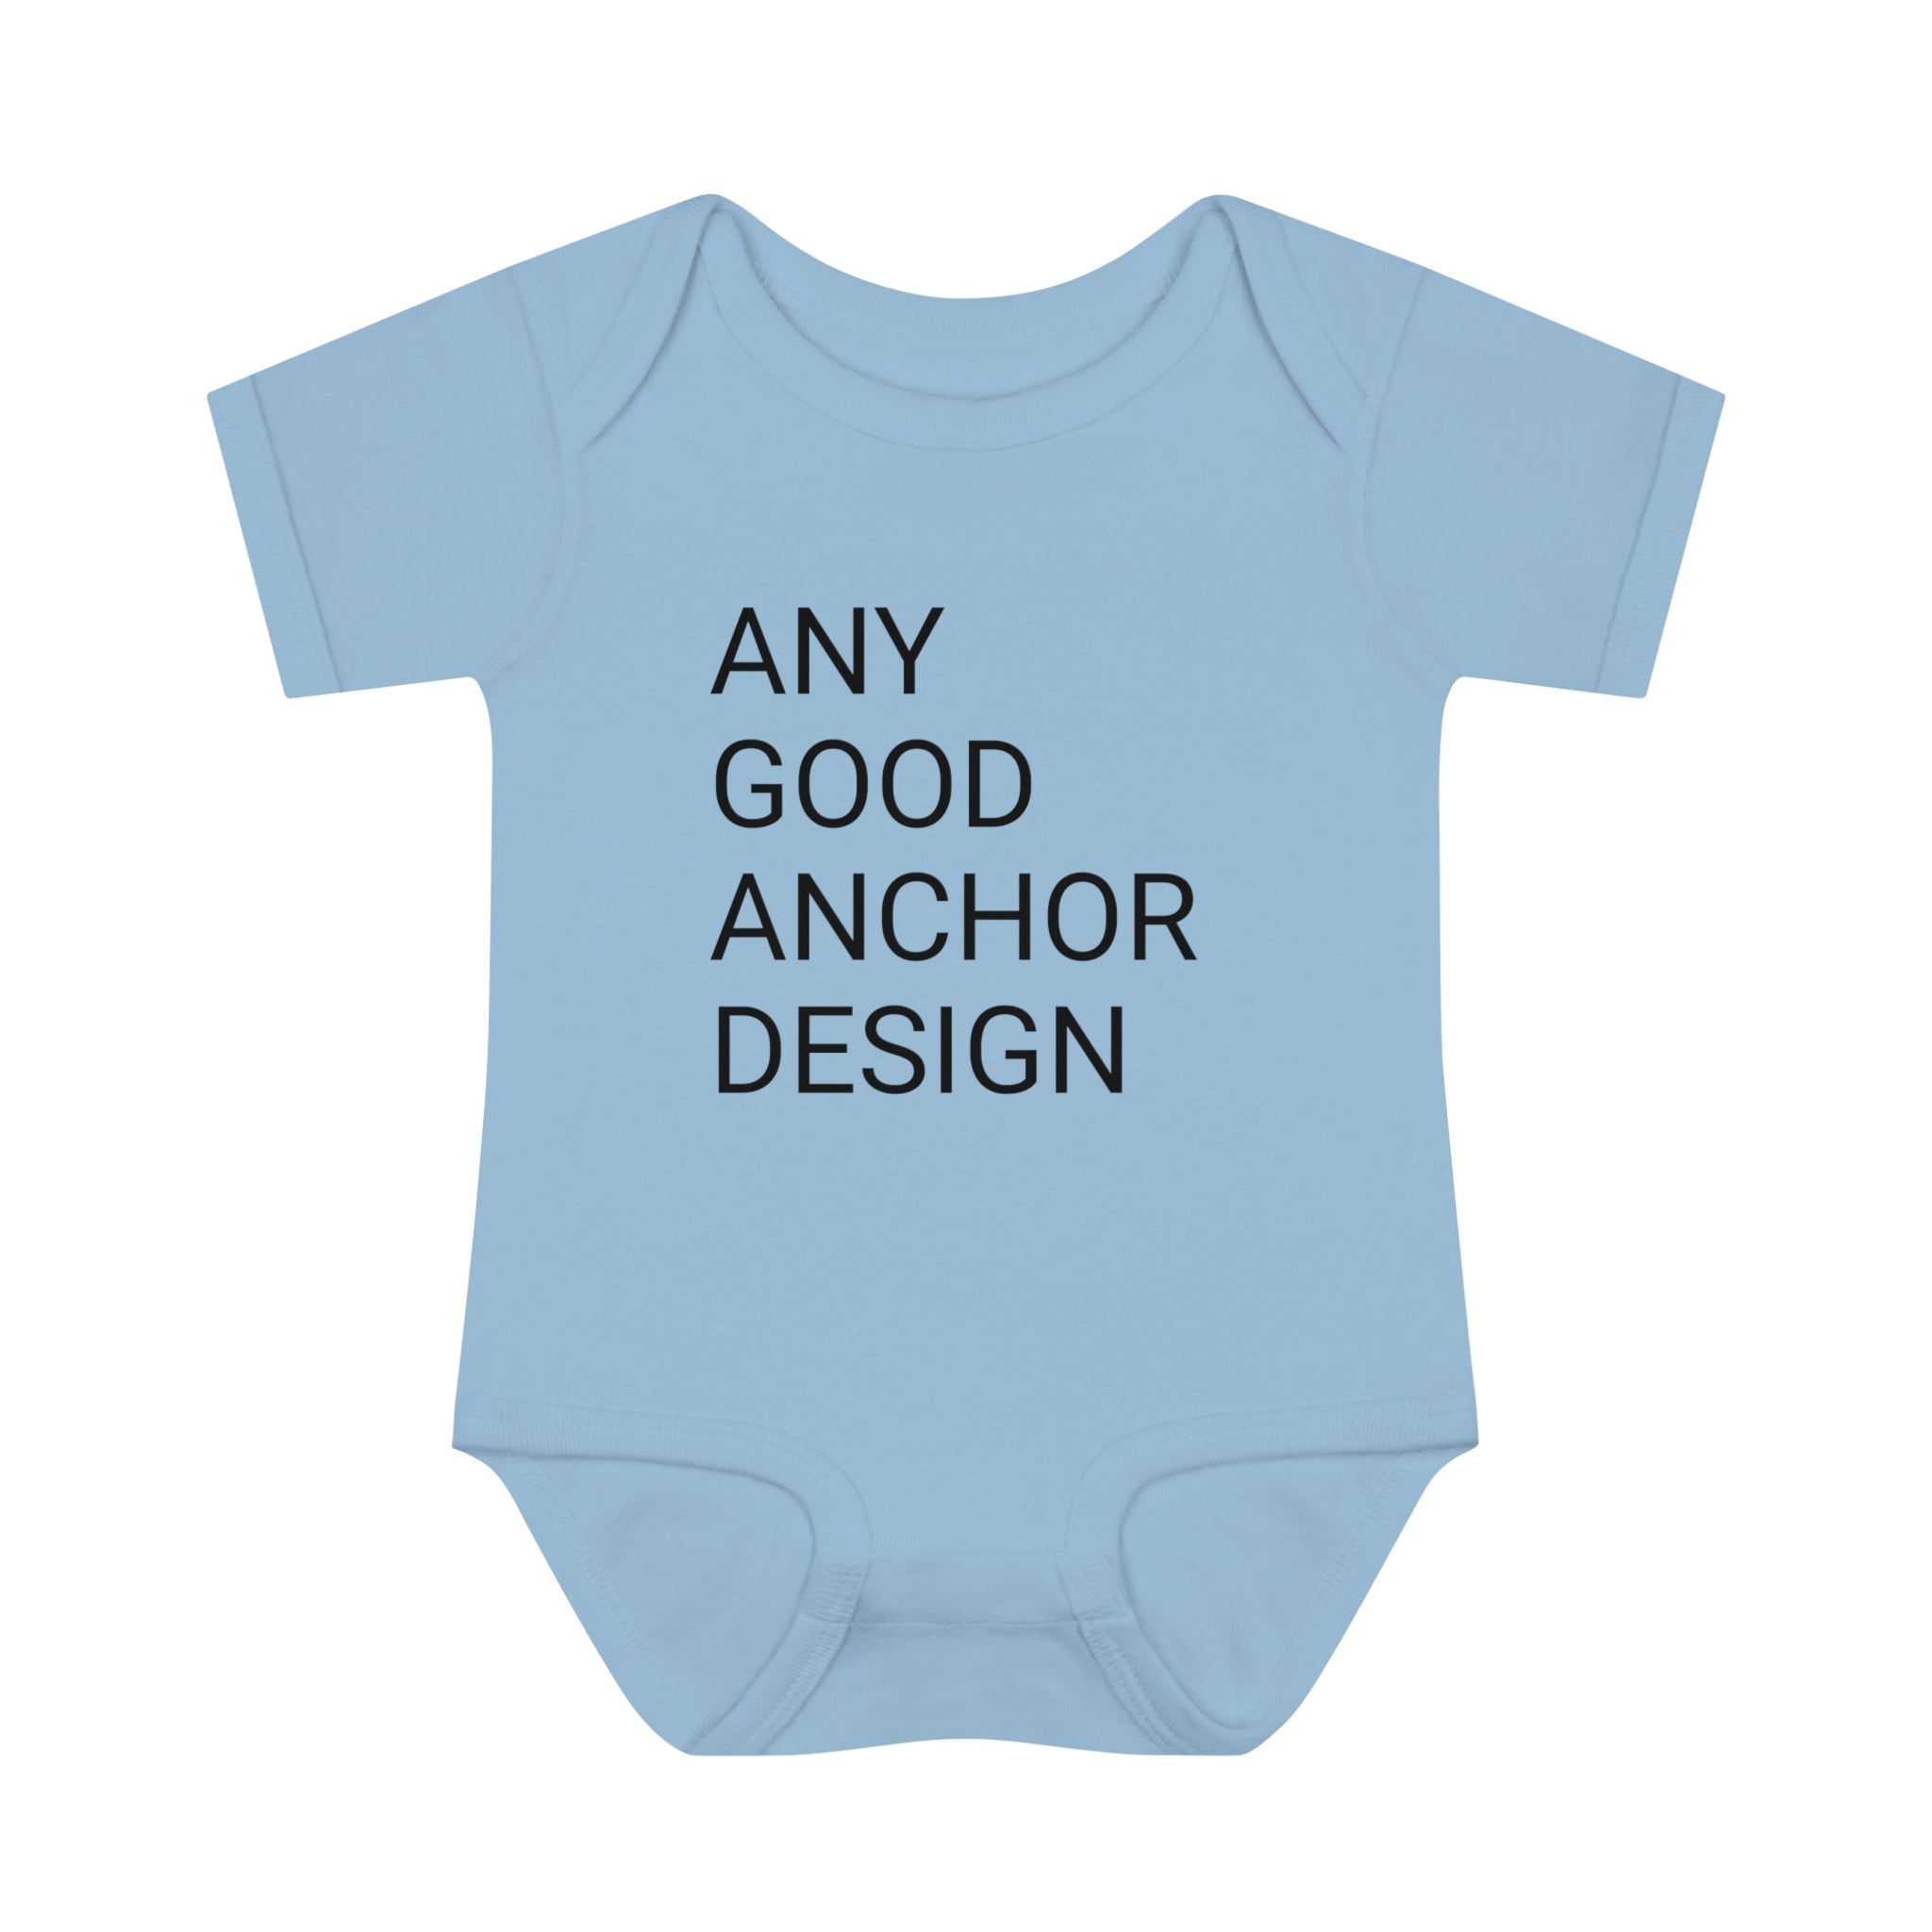 Baby Onesie NB-12M - Any Good Anchor Design